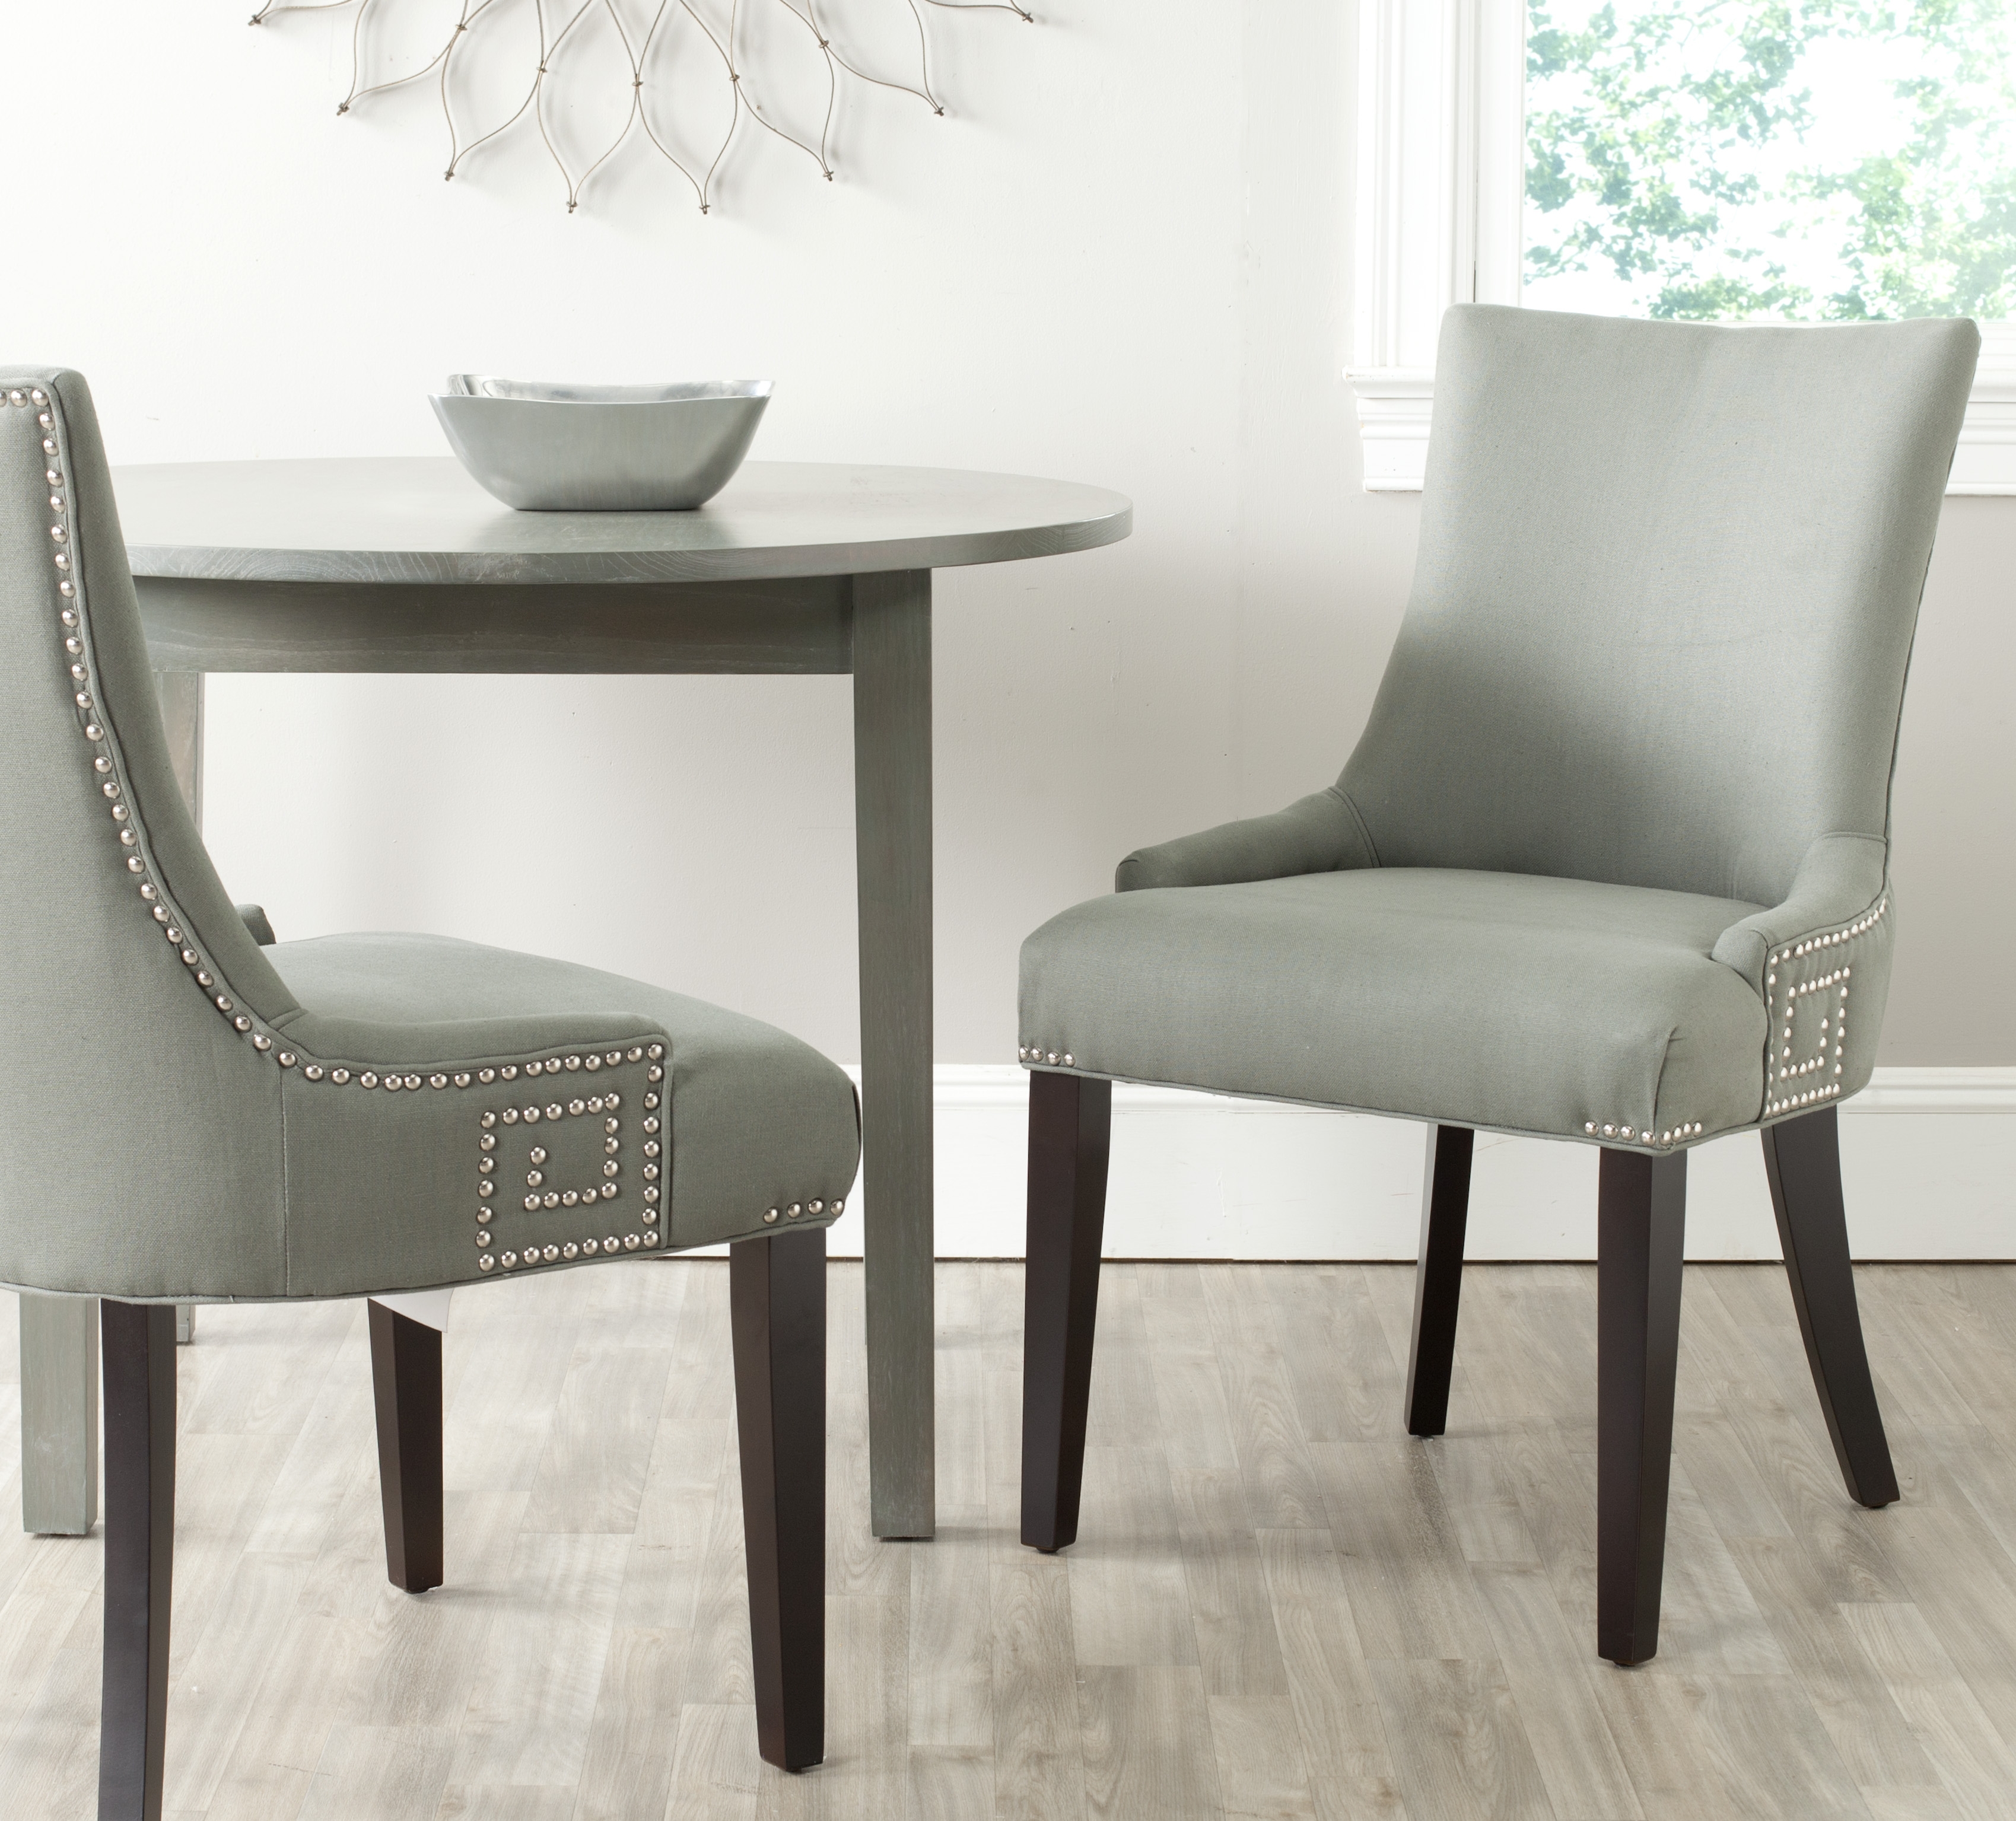 Gretchen 20''H Side Chair (Set Of 2) - Silver Nail Heads - Granite/Espresso - Arlo Home - Image 2